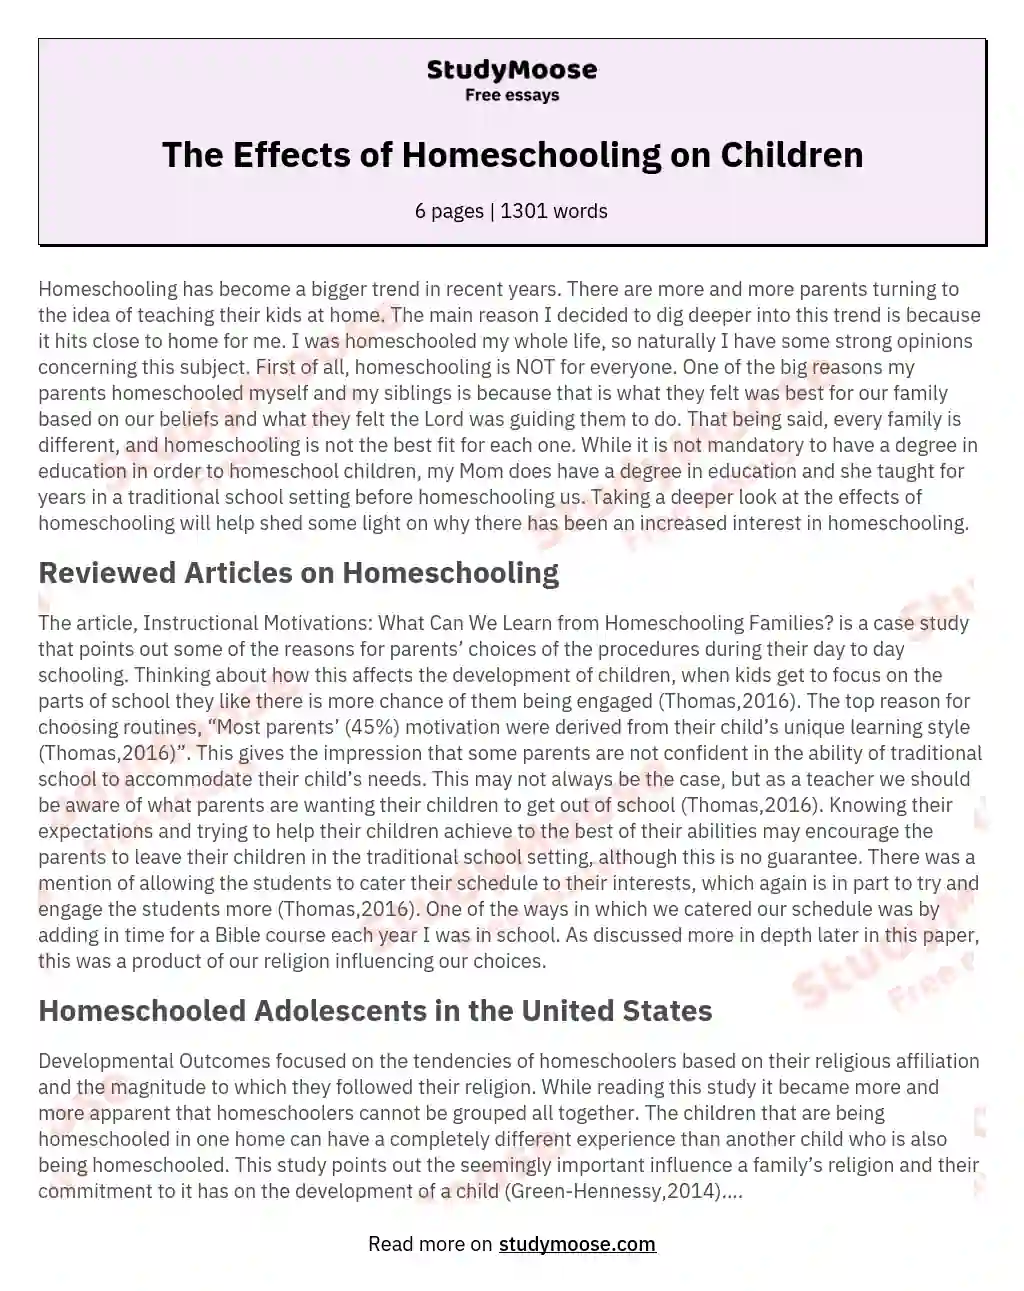 argumentative essay on homeschooling vs public schooling